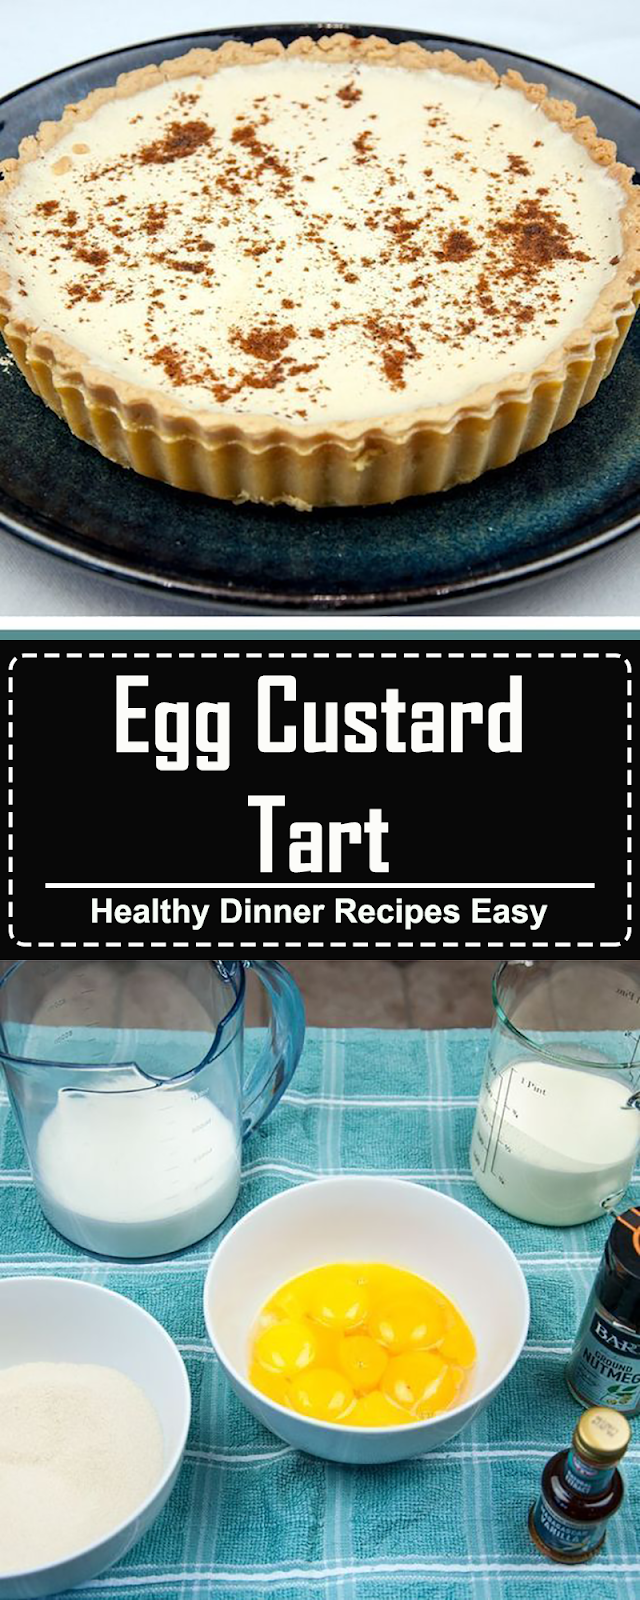 Egg Custard Tart - Healthy Dinner Recipes Easy